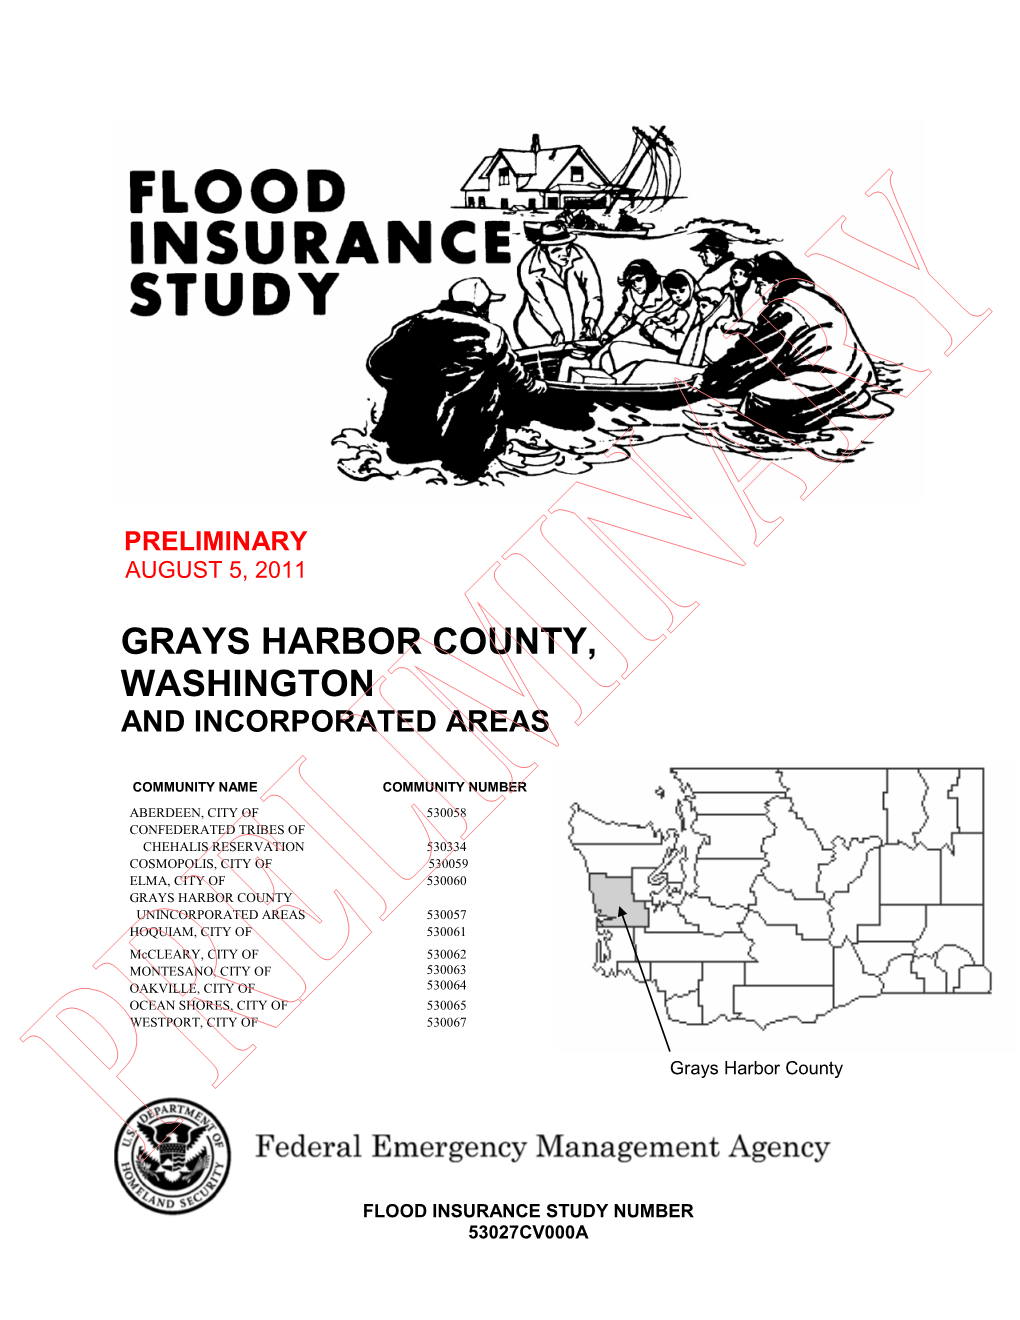 Grays Harbor County Flood Insurance Study